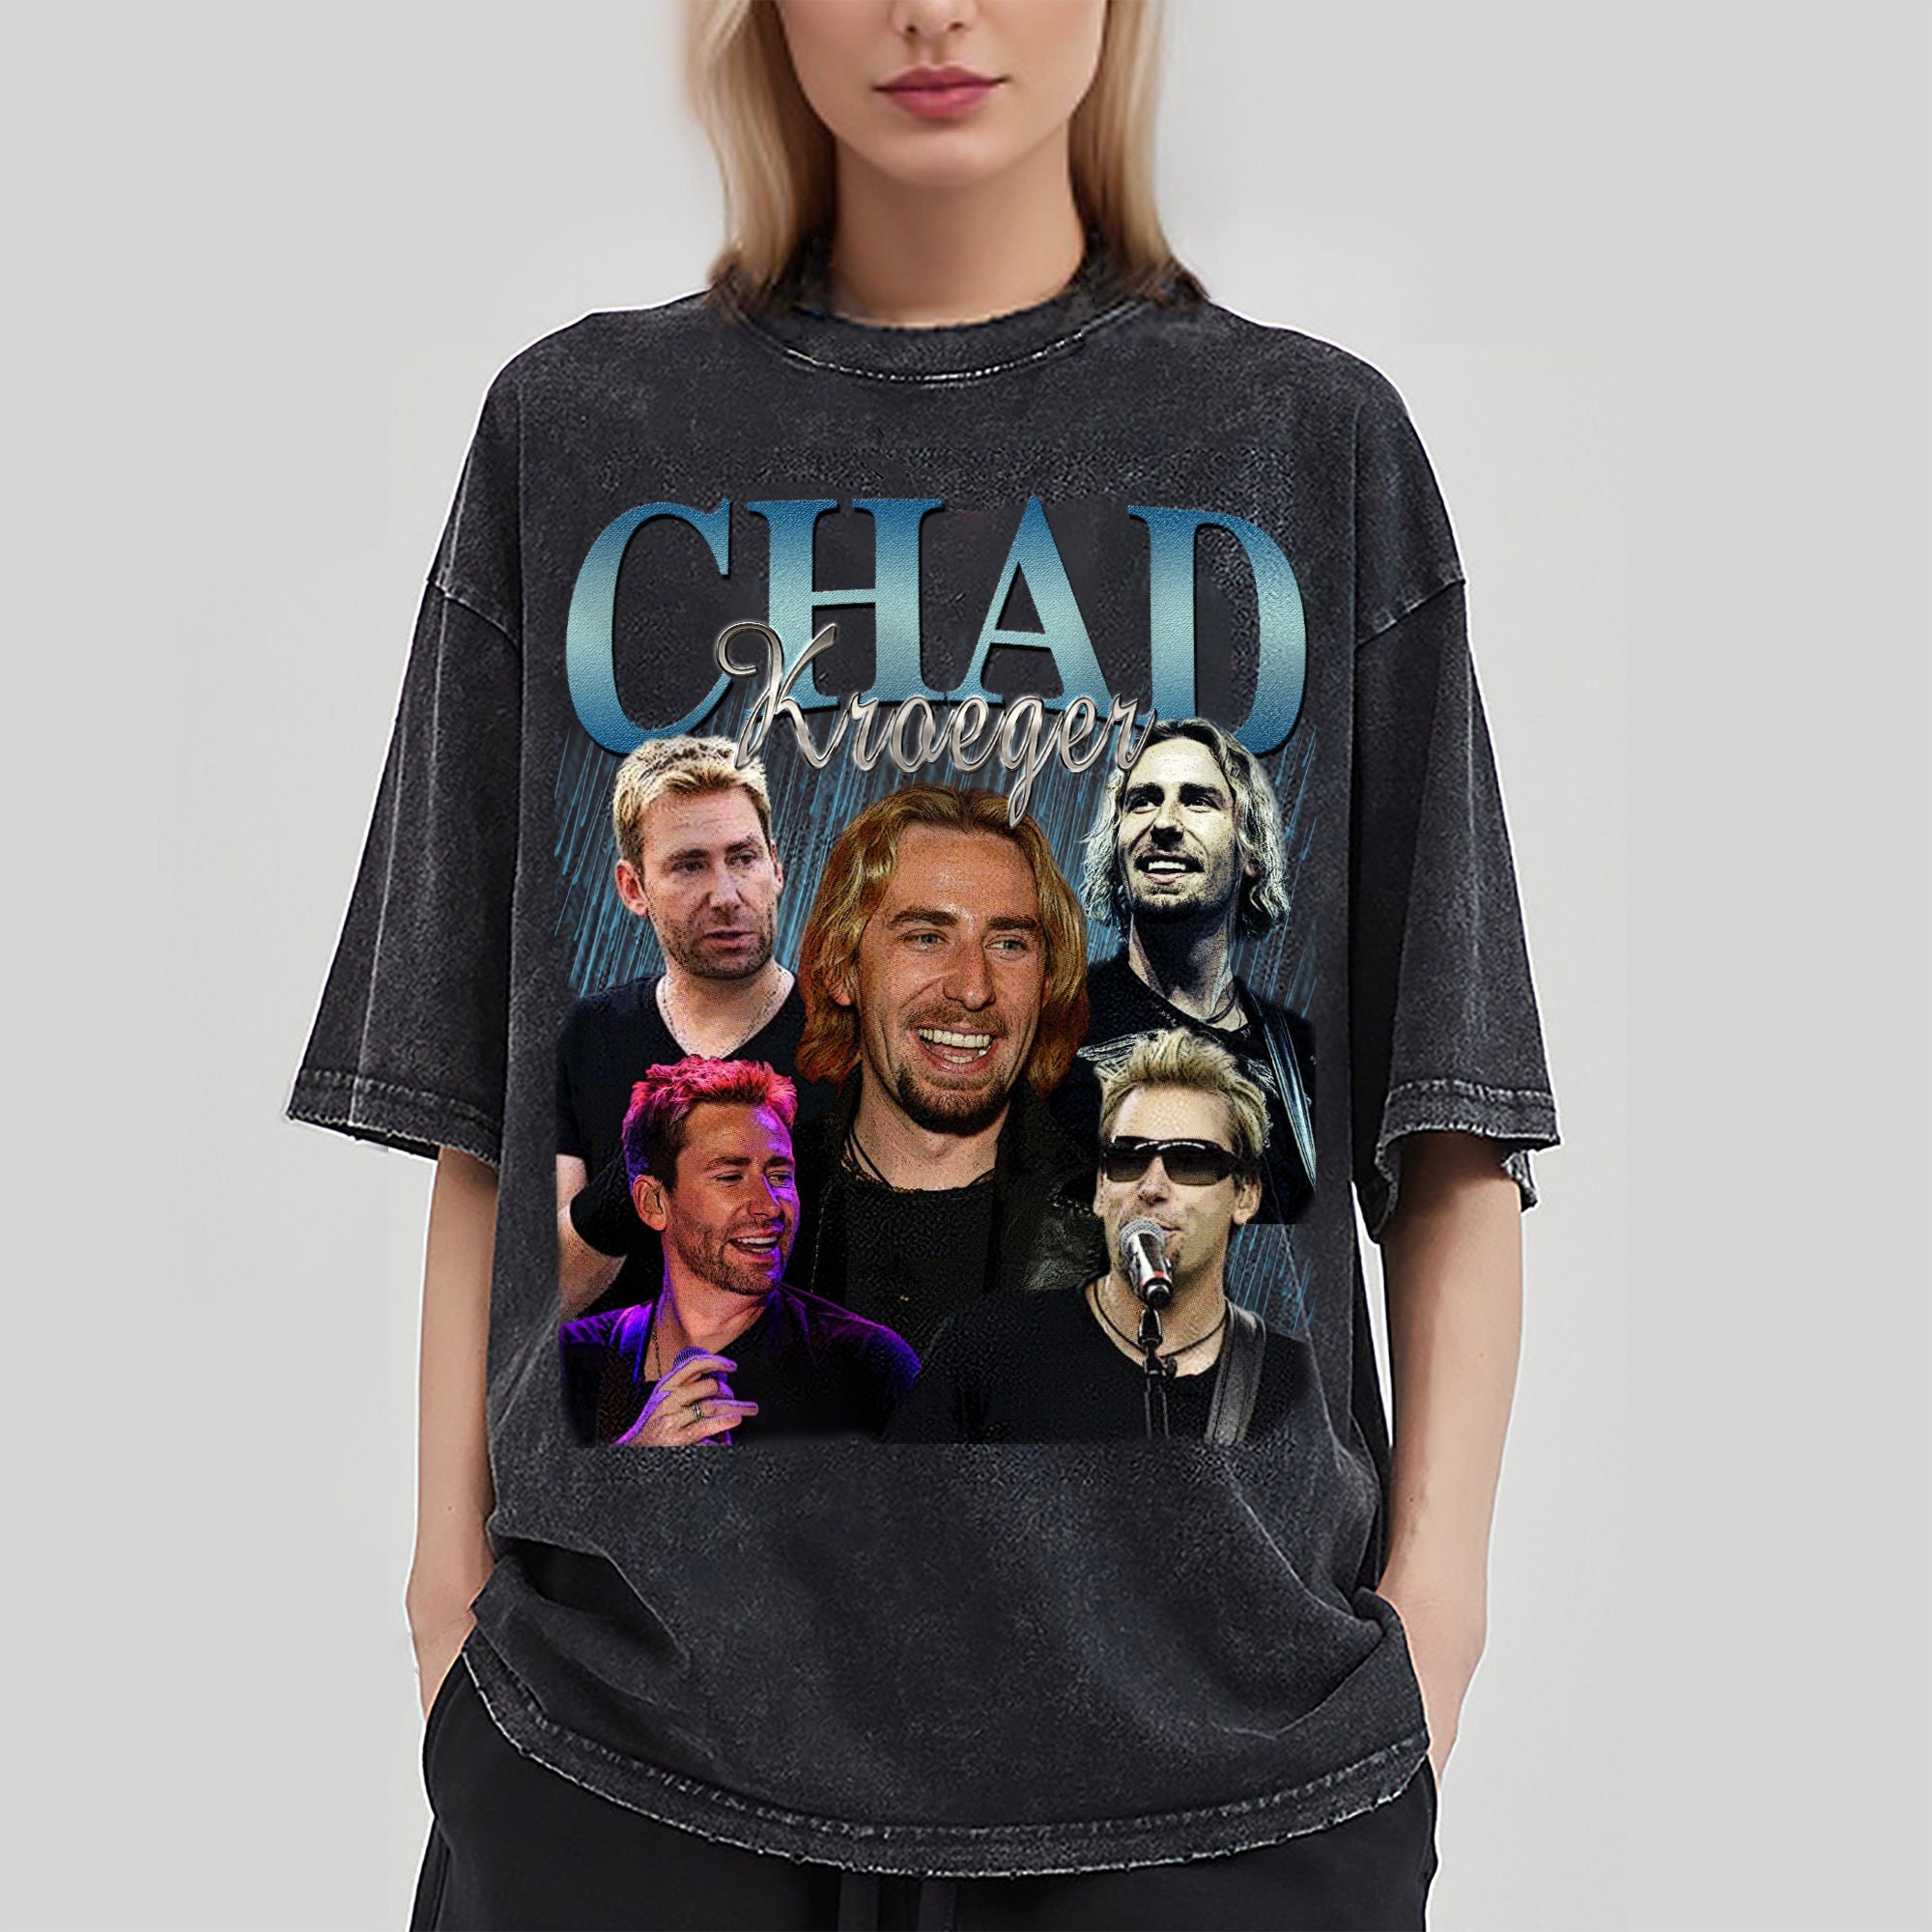 Gigachad Meme Funny Giga Chad Photoshop T-shirt -  Portugal